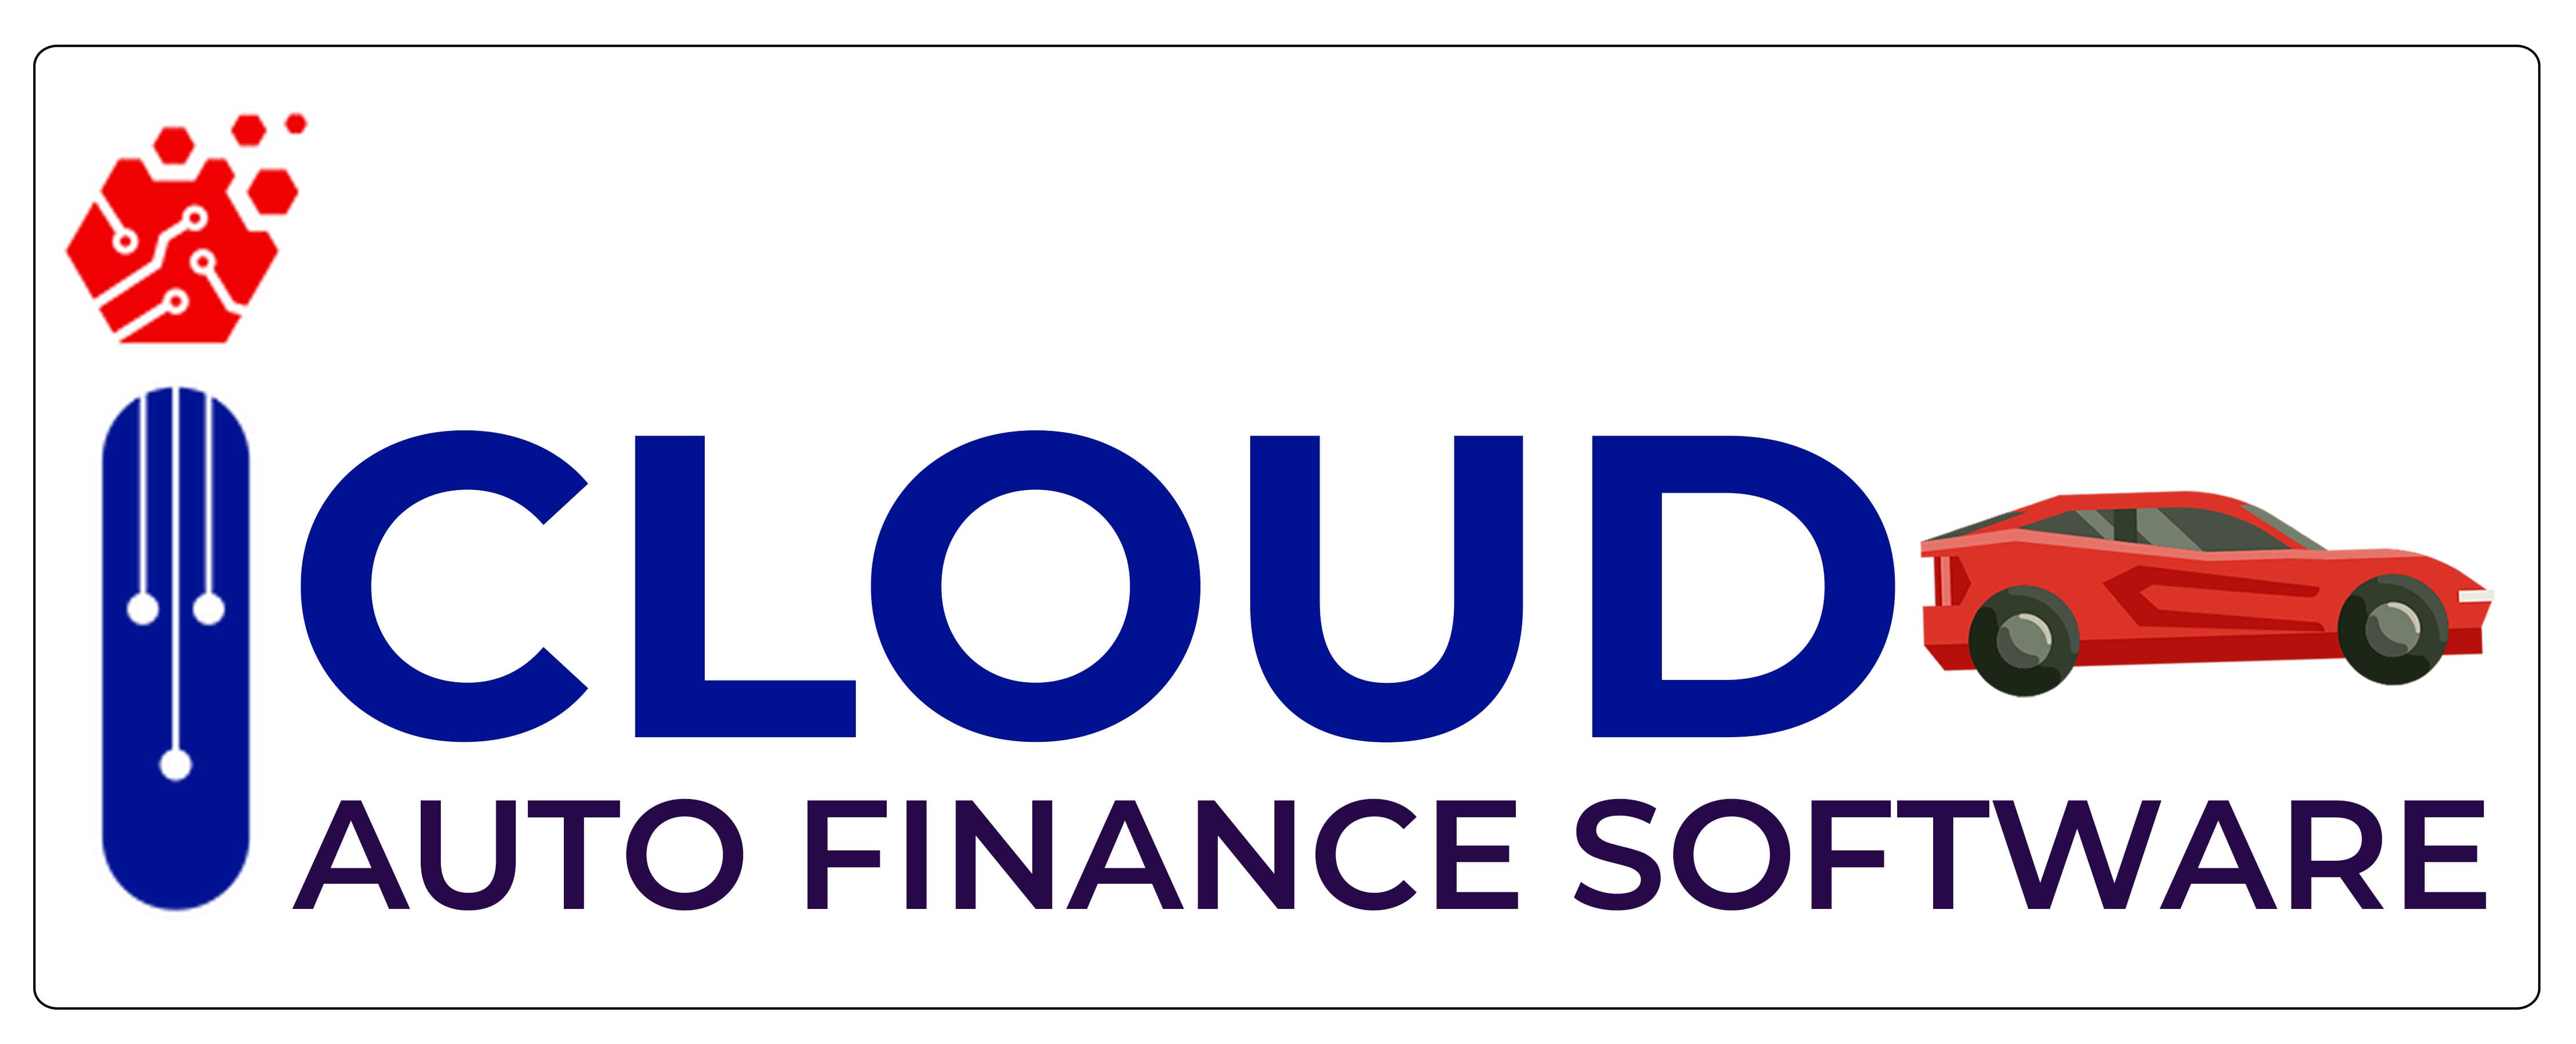 Auto Finance Software Vehicle Loan Software Vehicle Finance